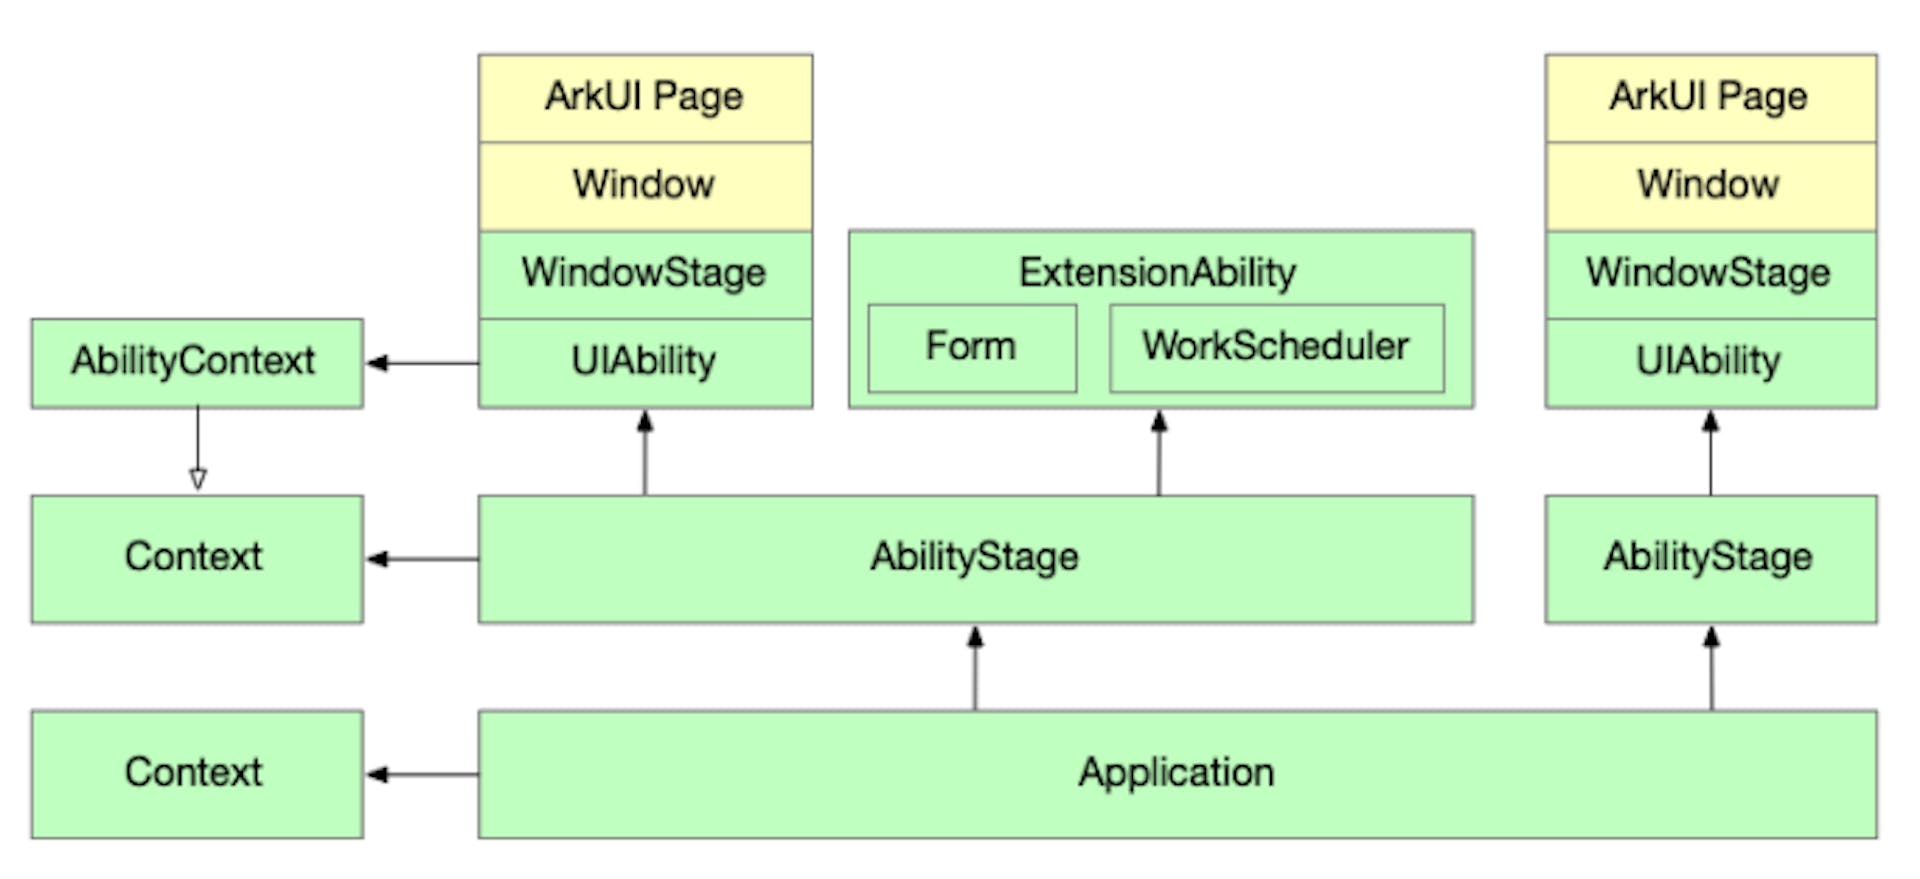 Fig. 2. The Architecture of ArkTS-based App Development Framework (Stage Model) of OpenHarmony.